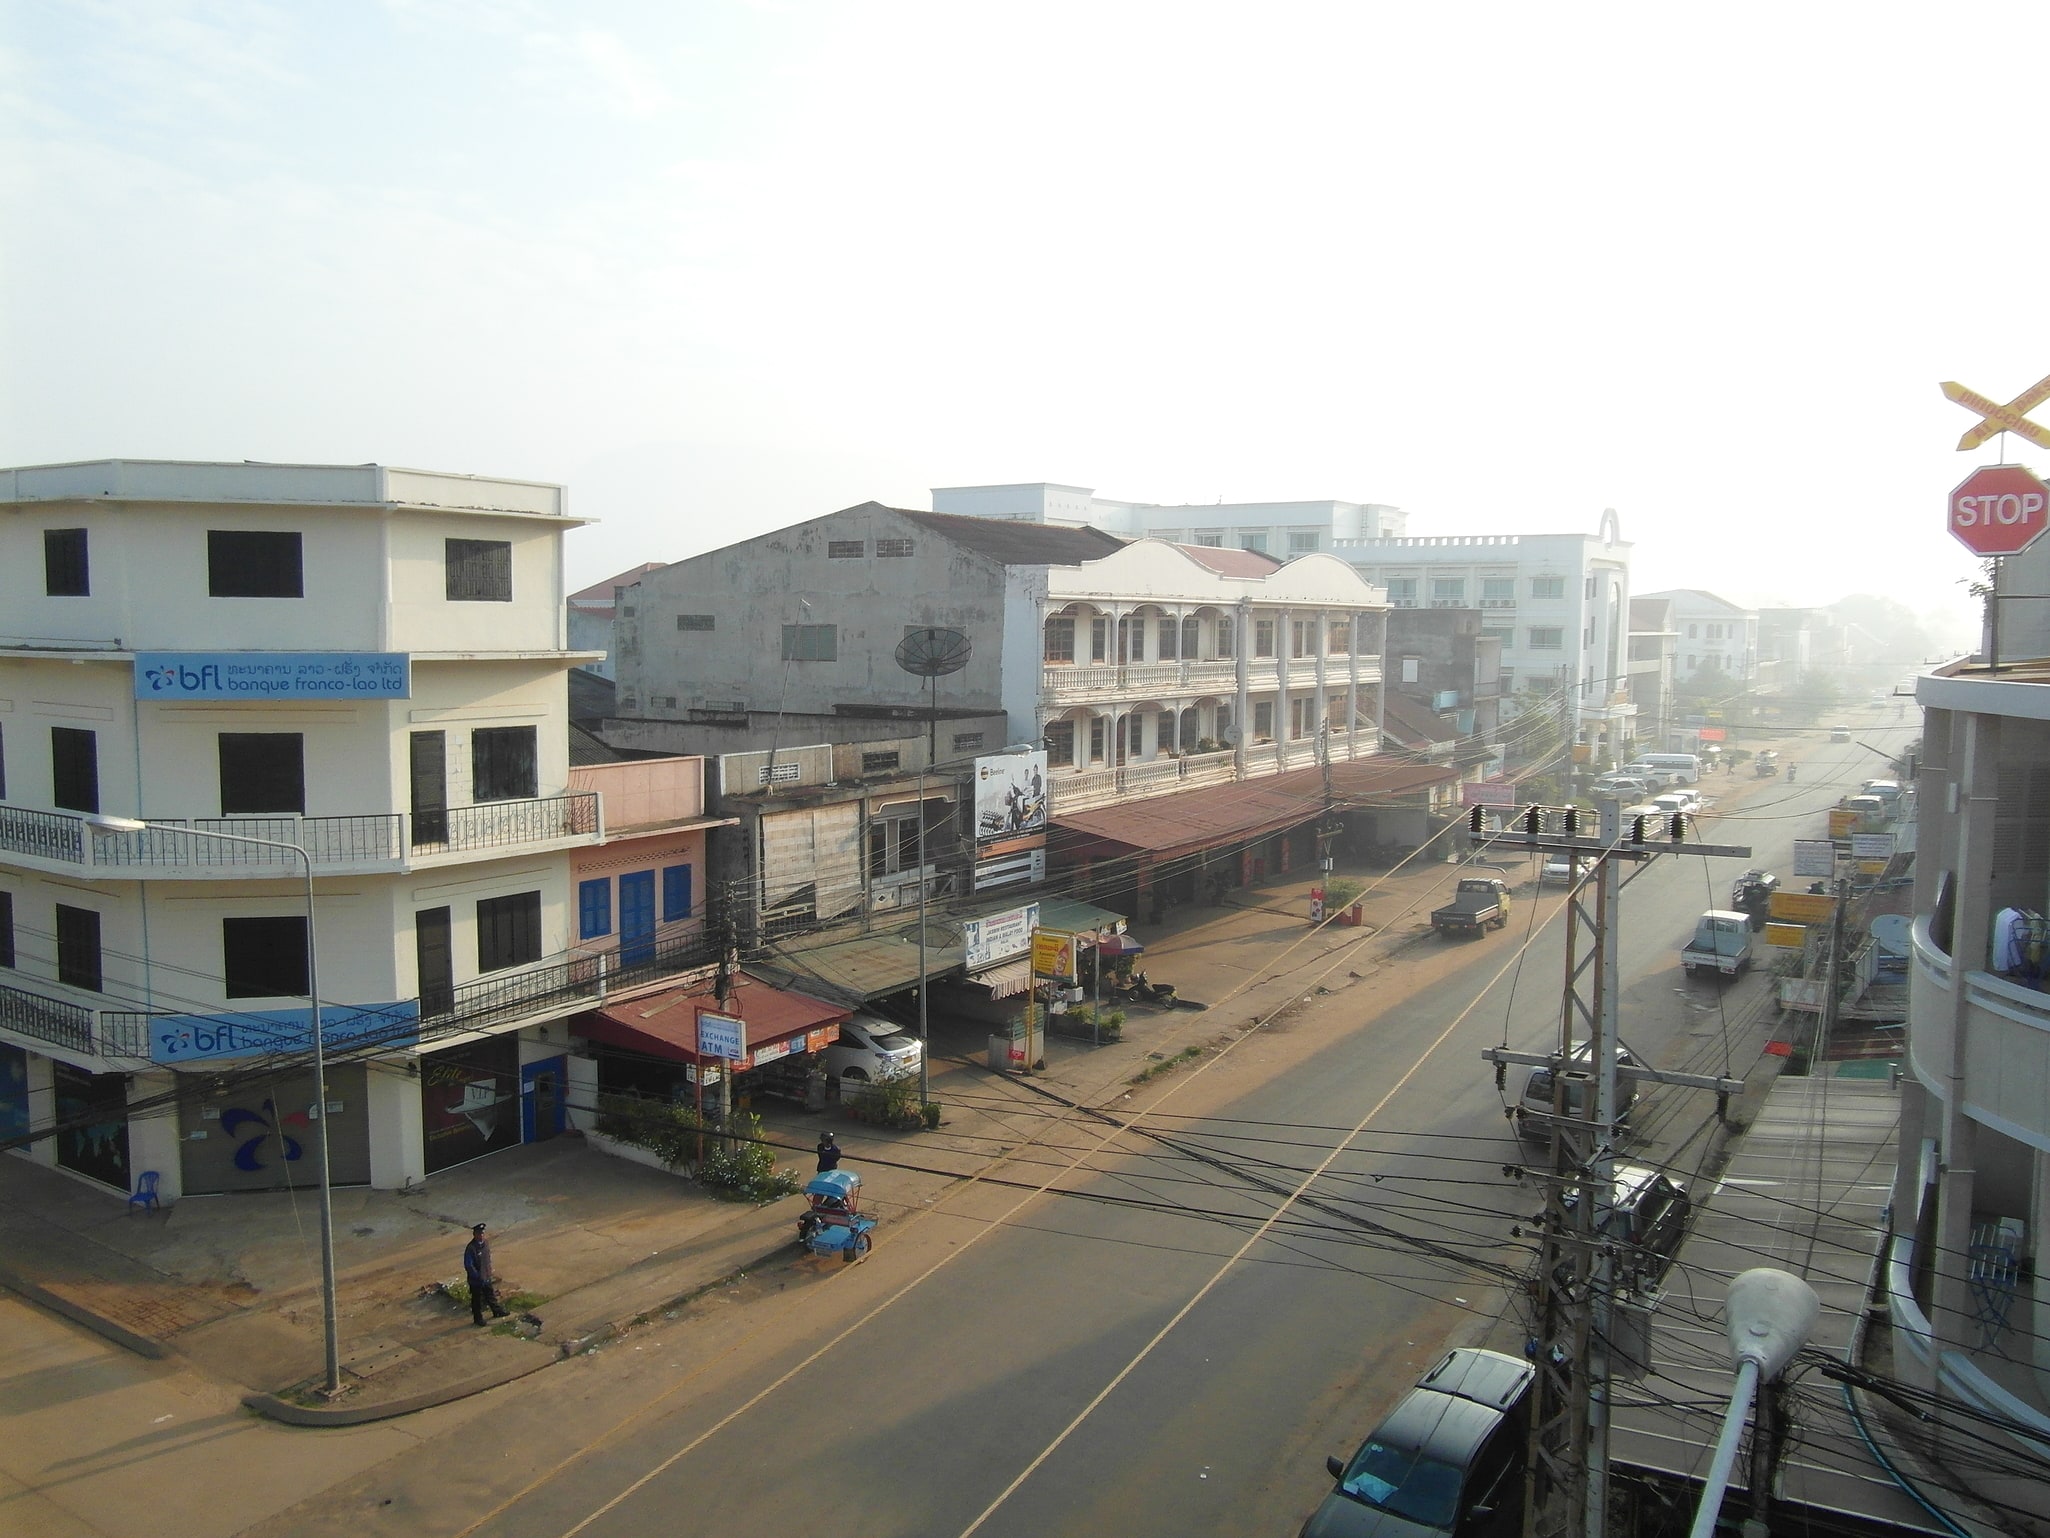 Pakxé, Laos